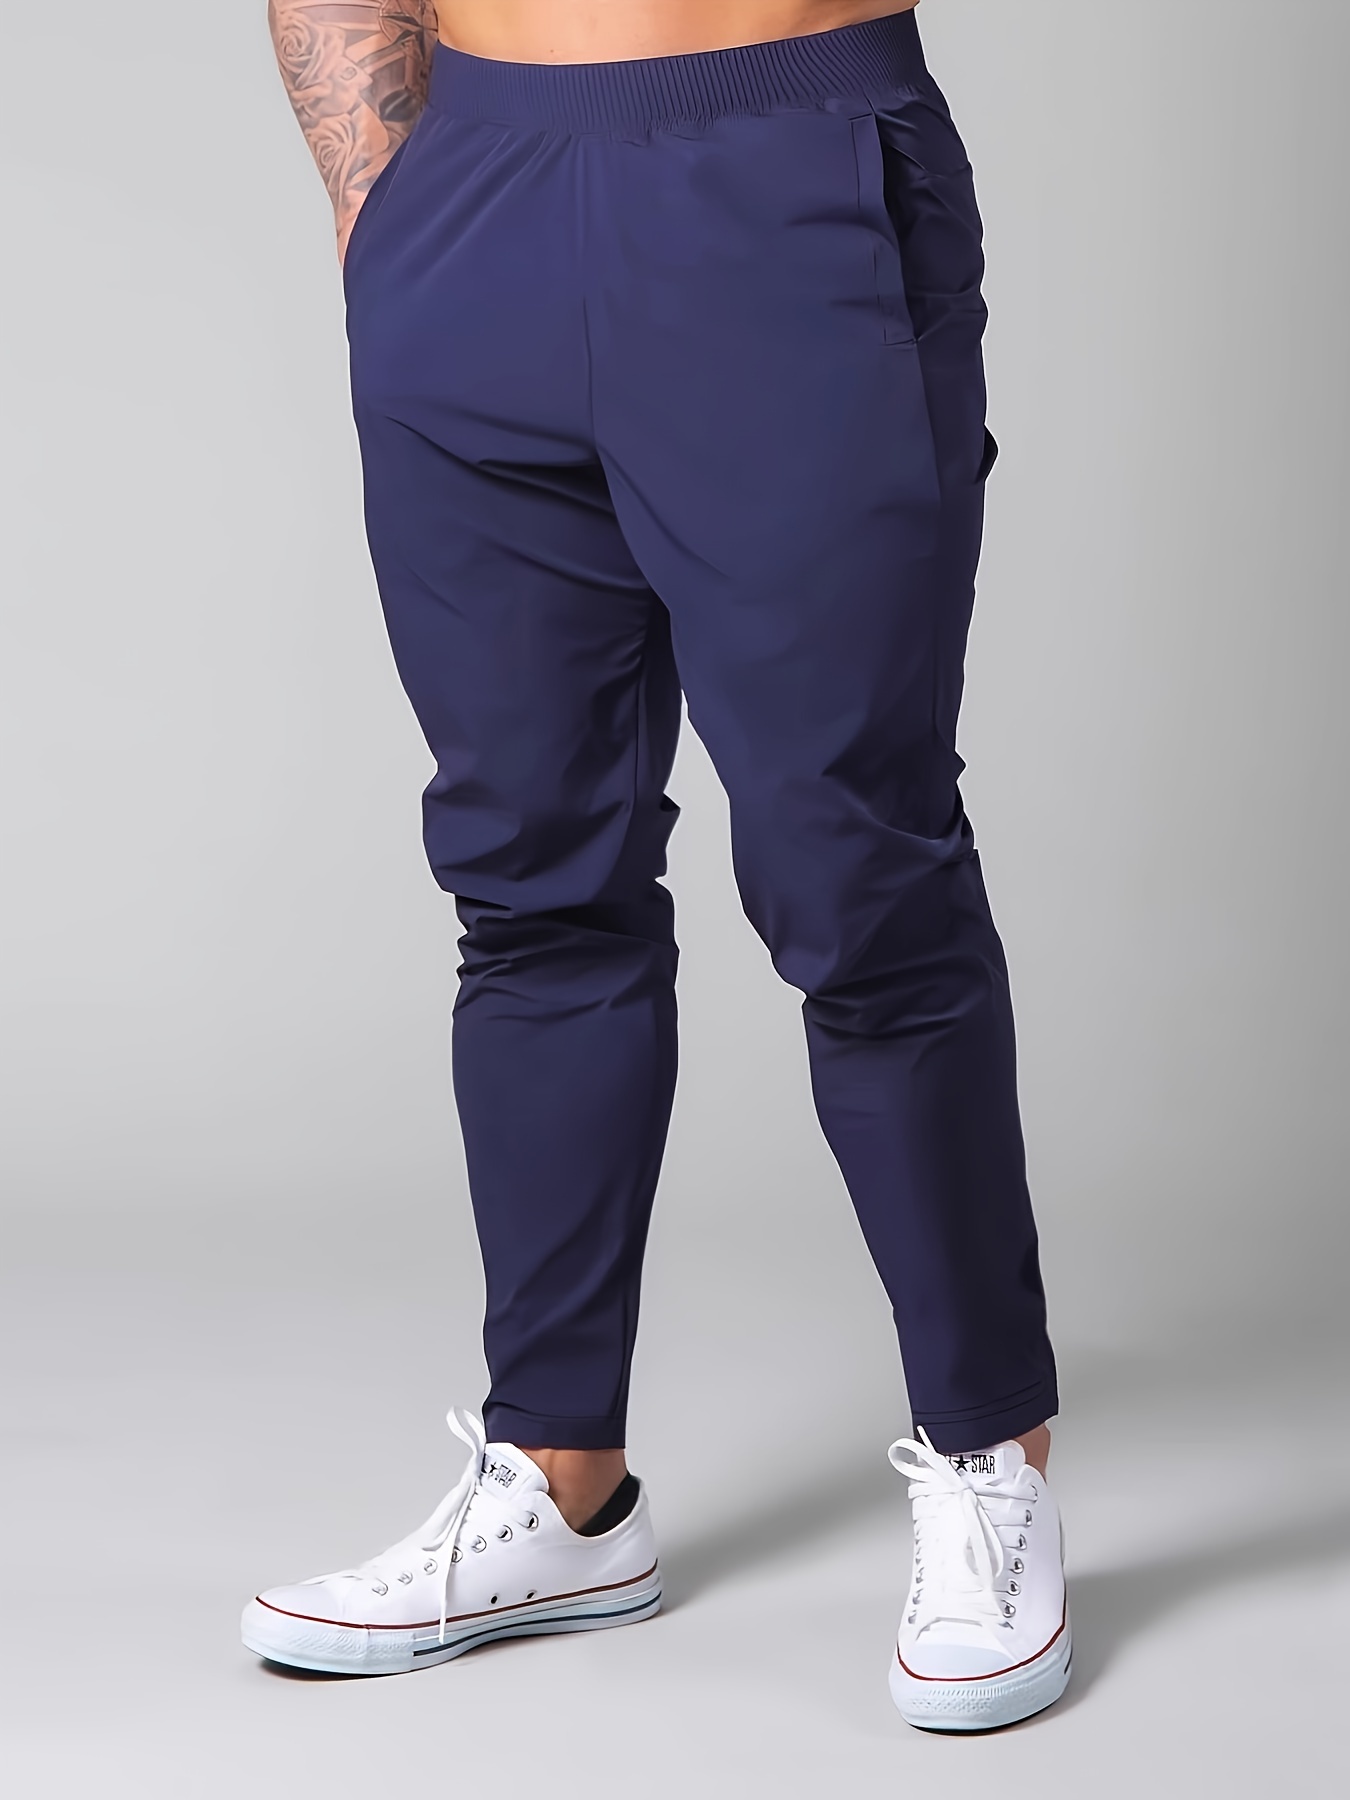 Men's Jogger Sweatpants Slim Fit Nylon Stretch Athletic Pants - Navy / S